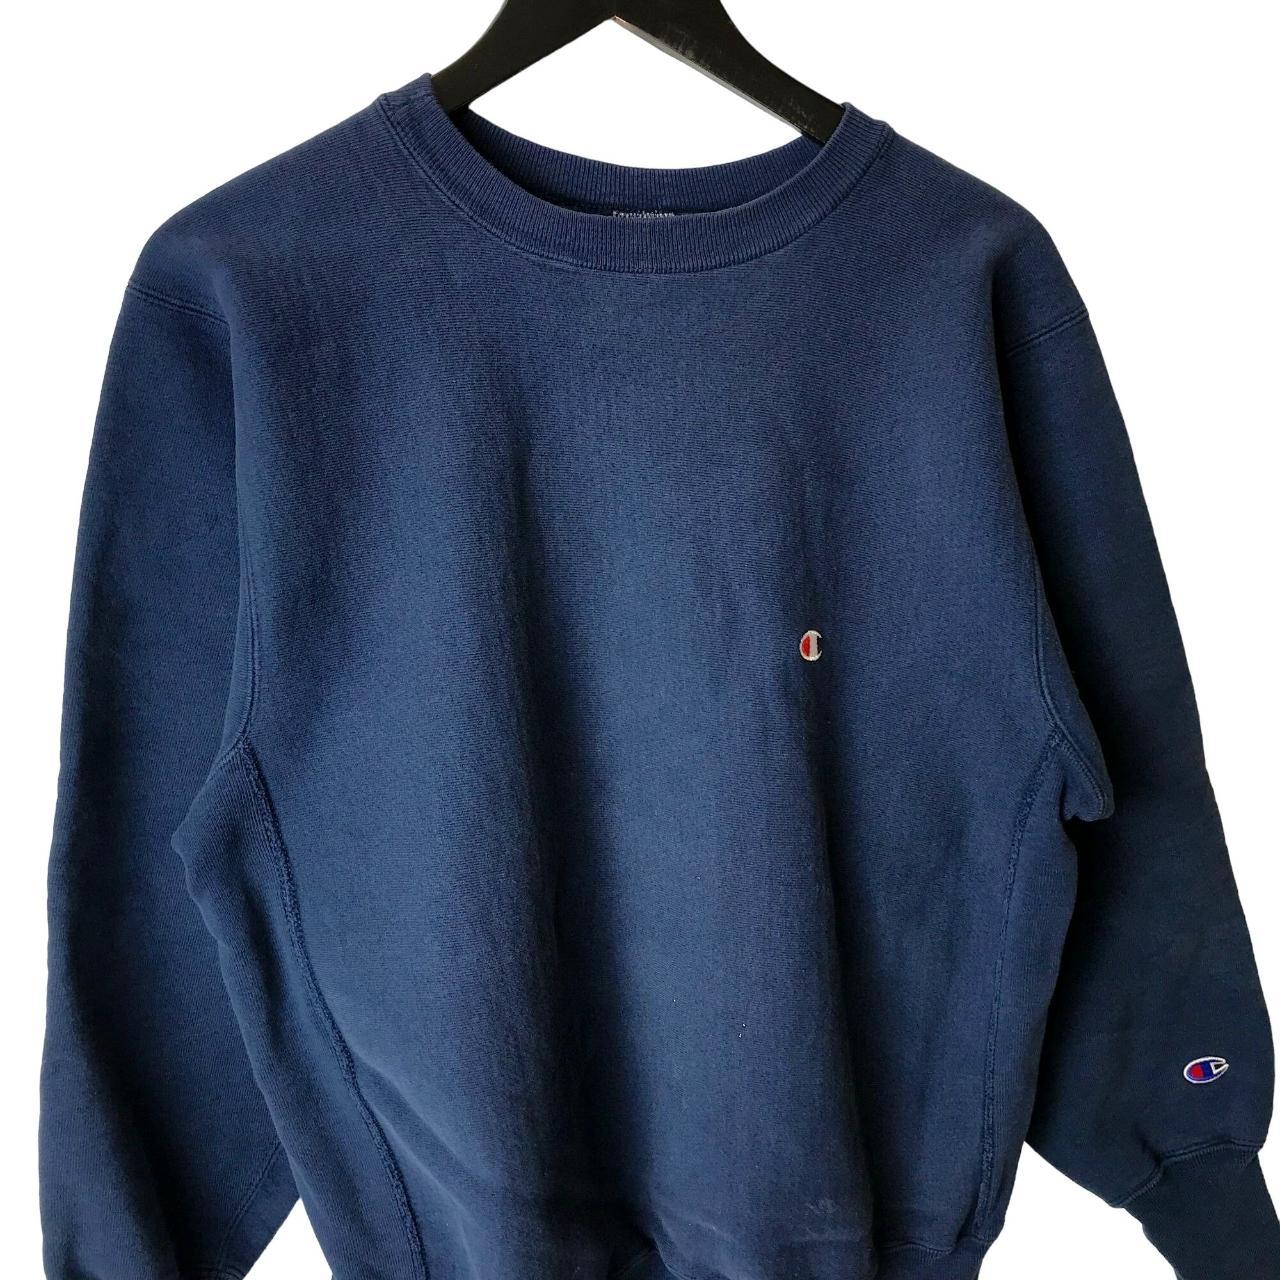 Vintage 90s Champion Crewneck Sweatshirt USA Blue L... - Depop